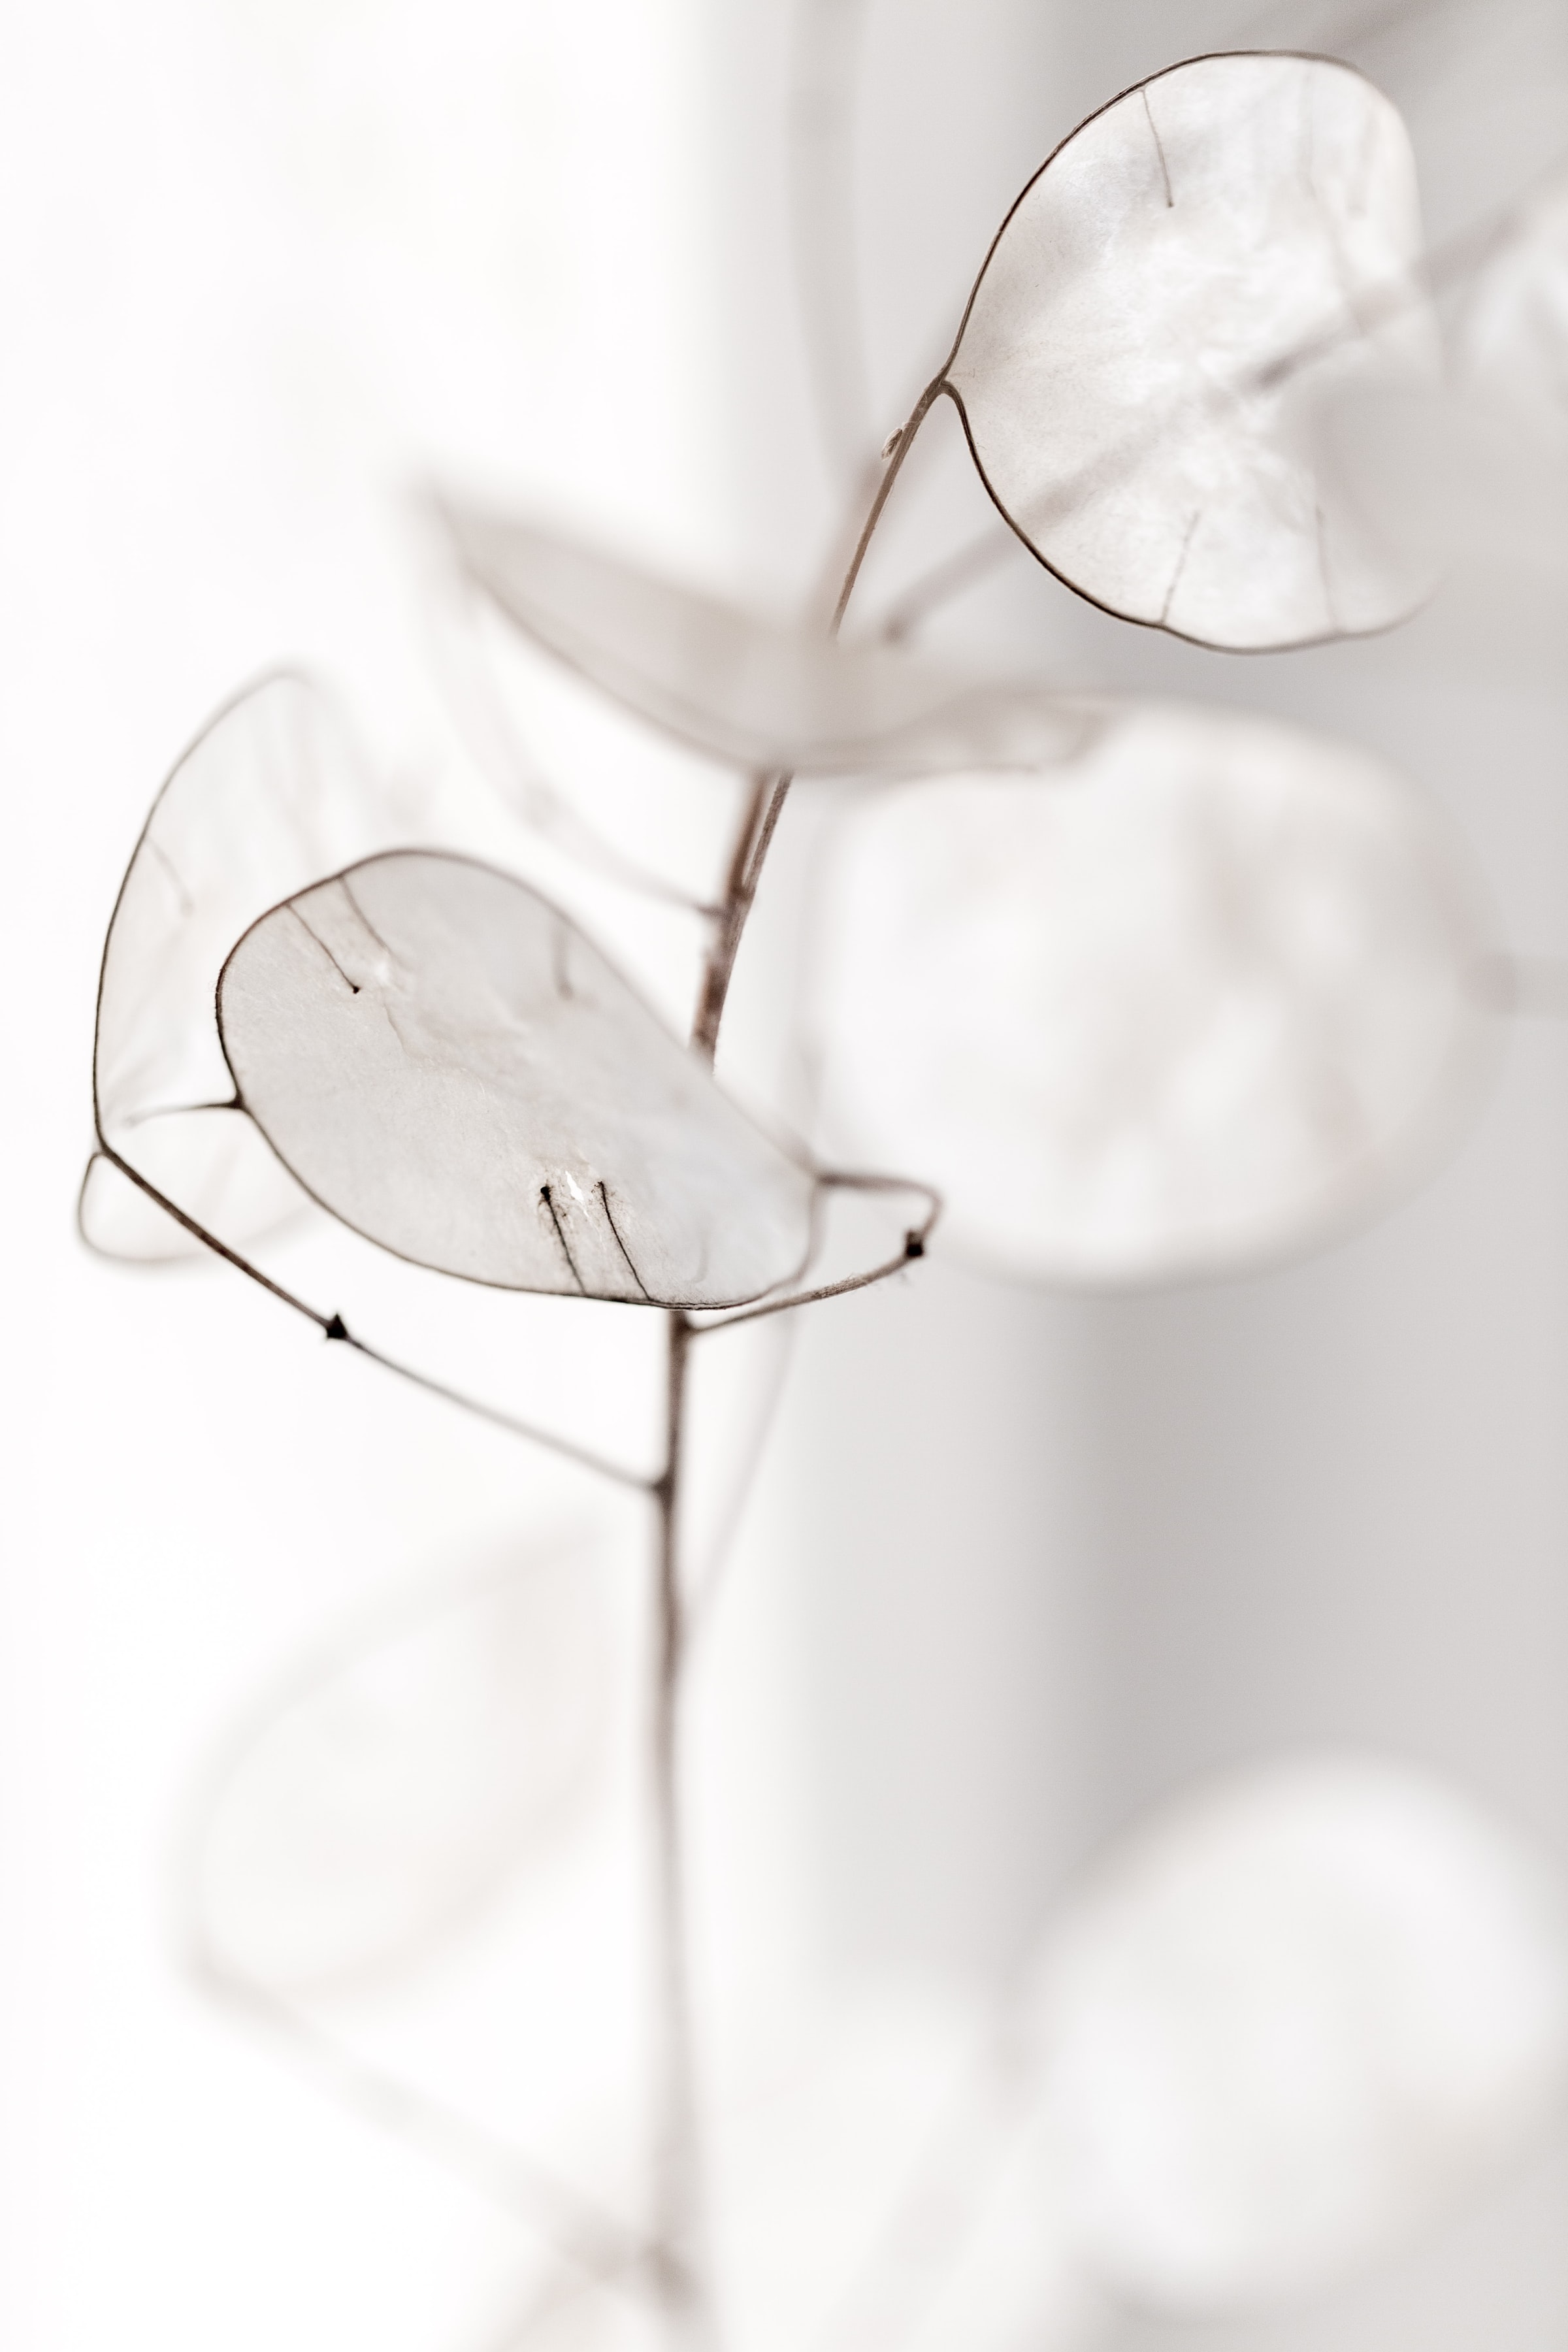 White Leaves image